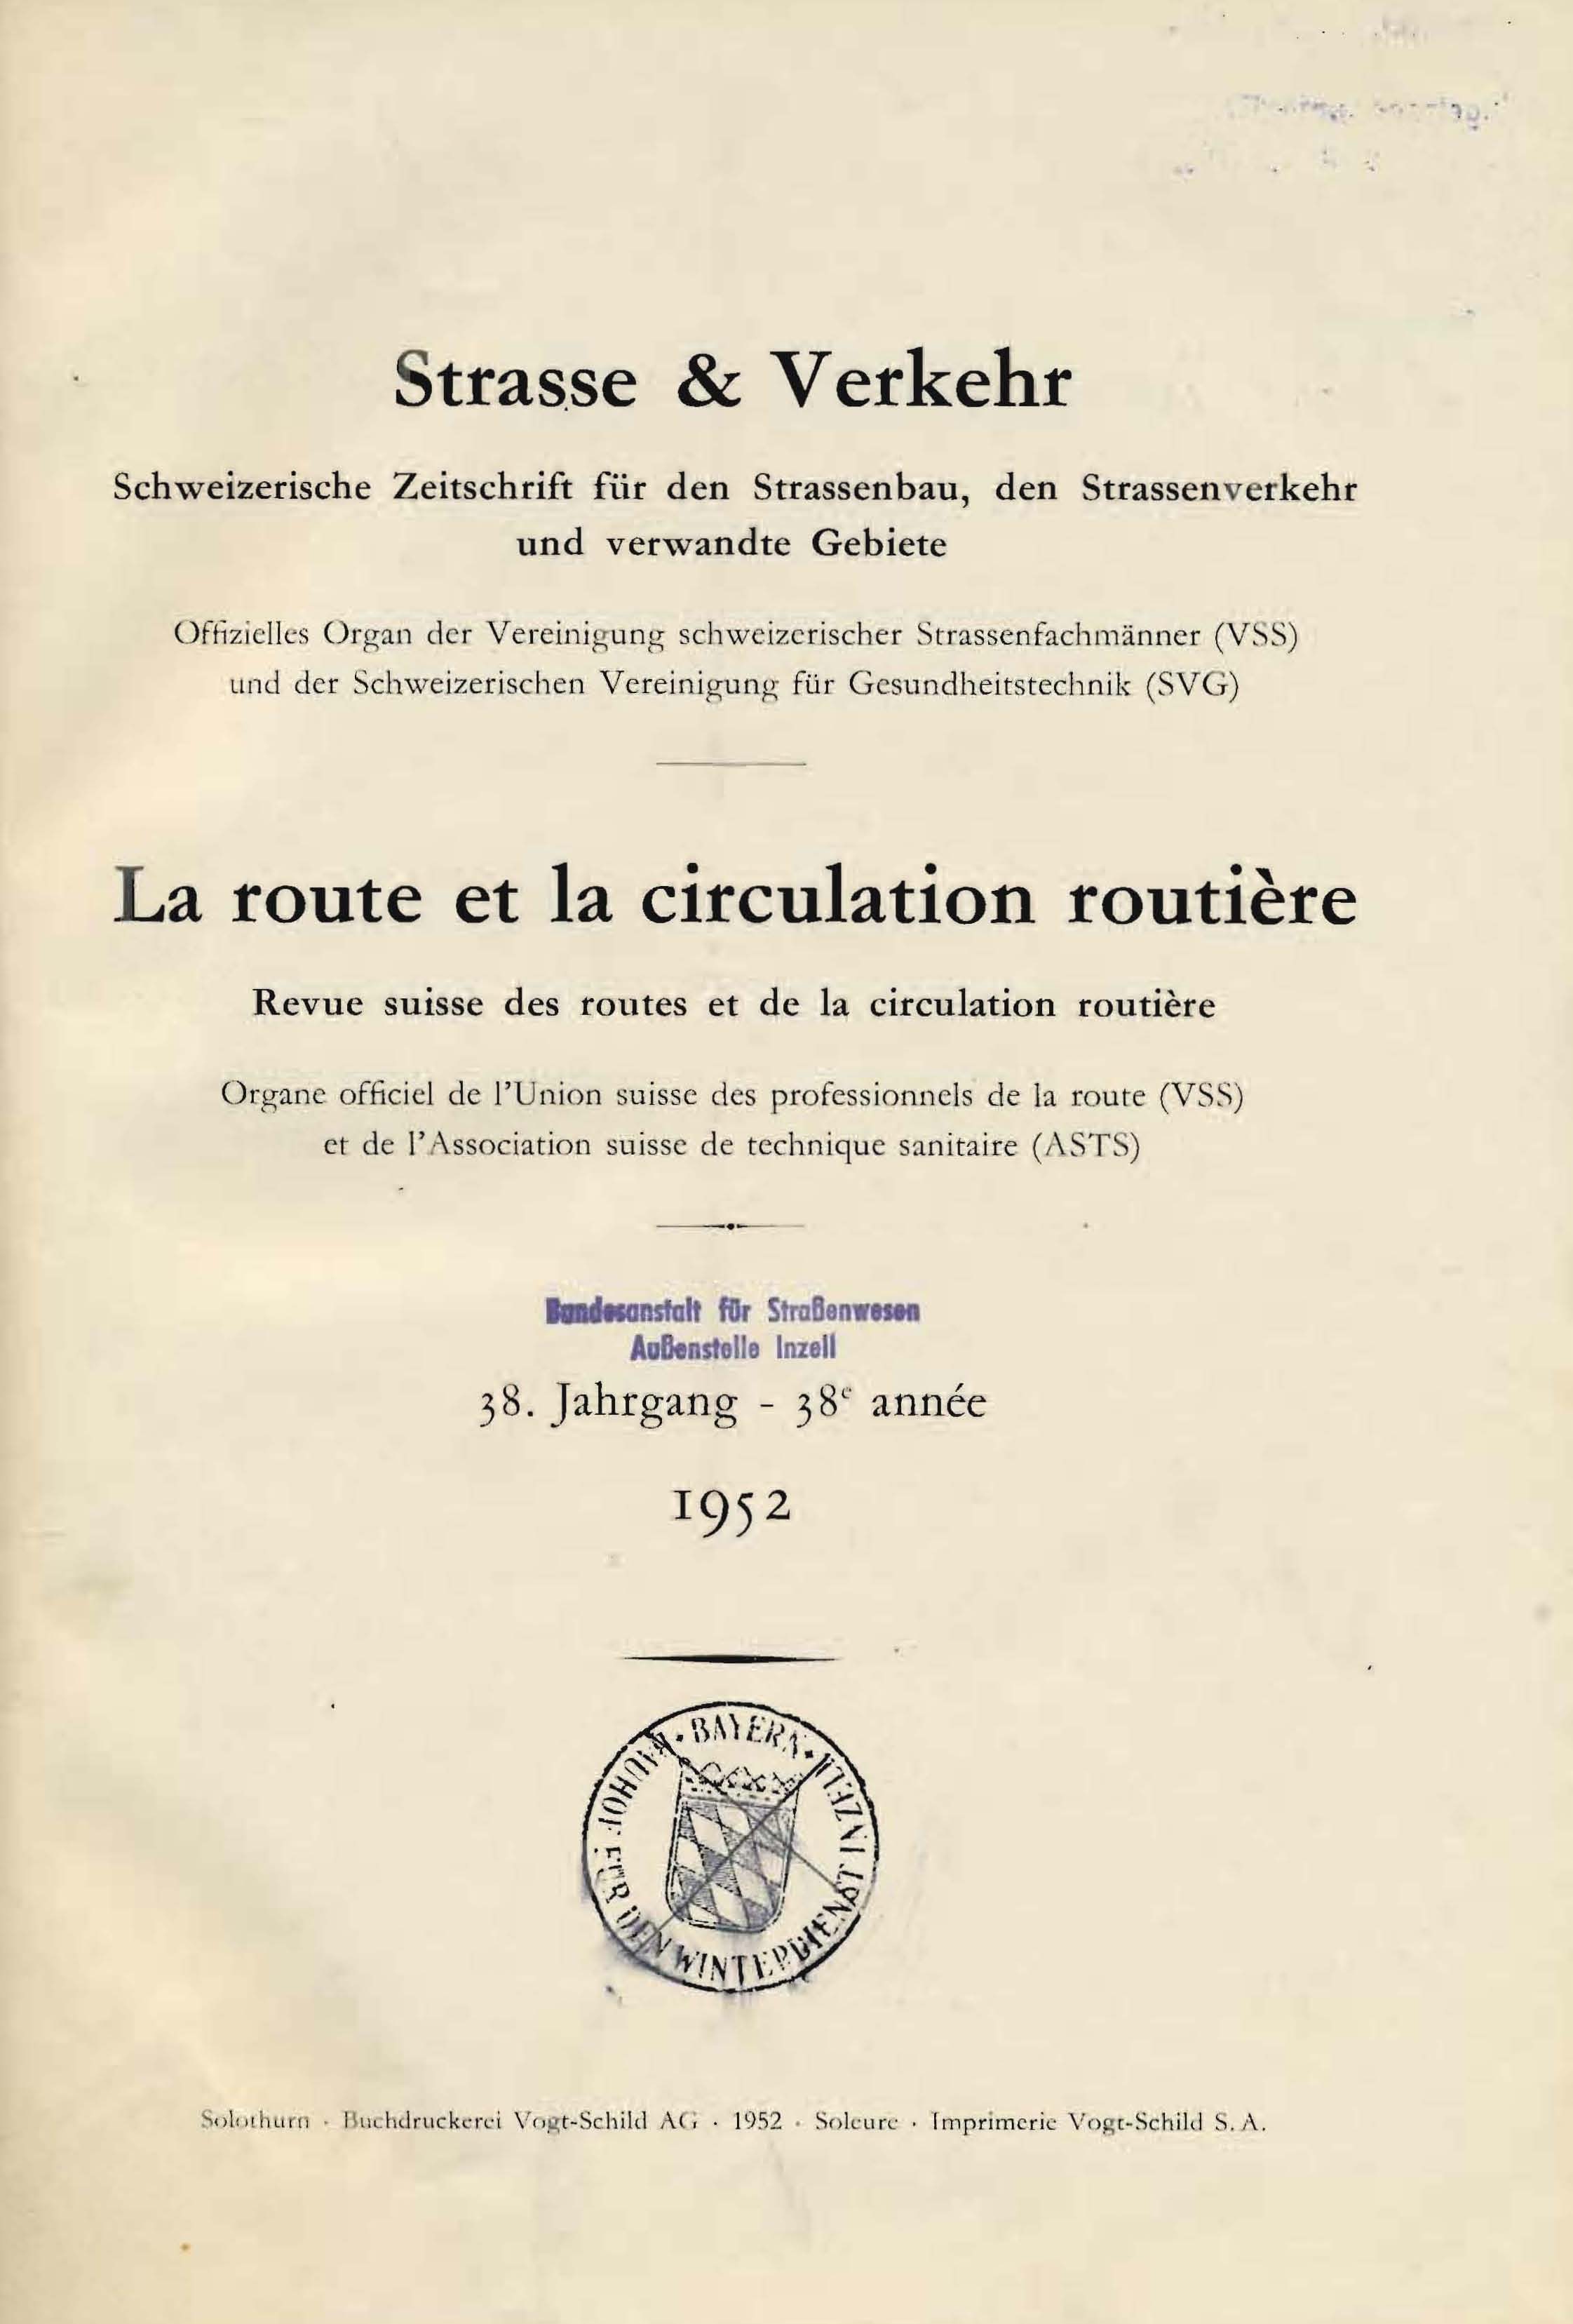 Strasse & Verkehr, 38. Jahrgang 1952